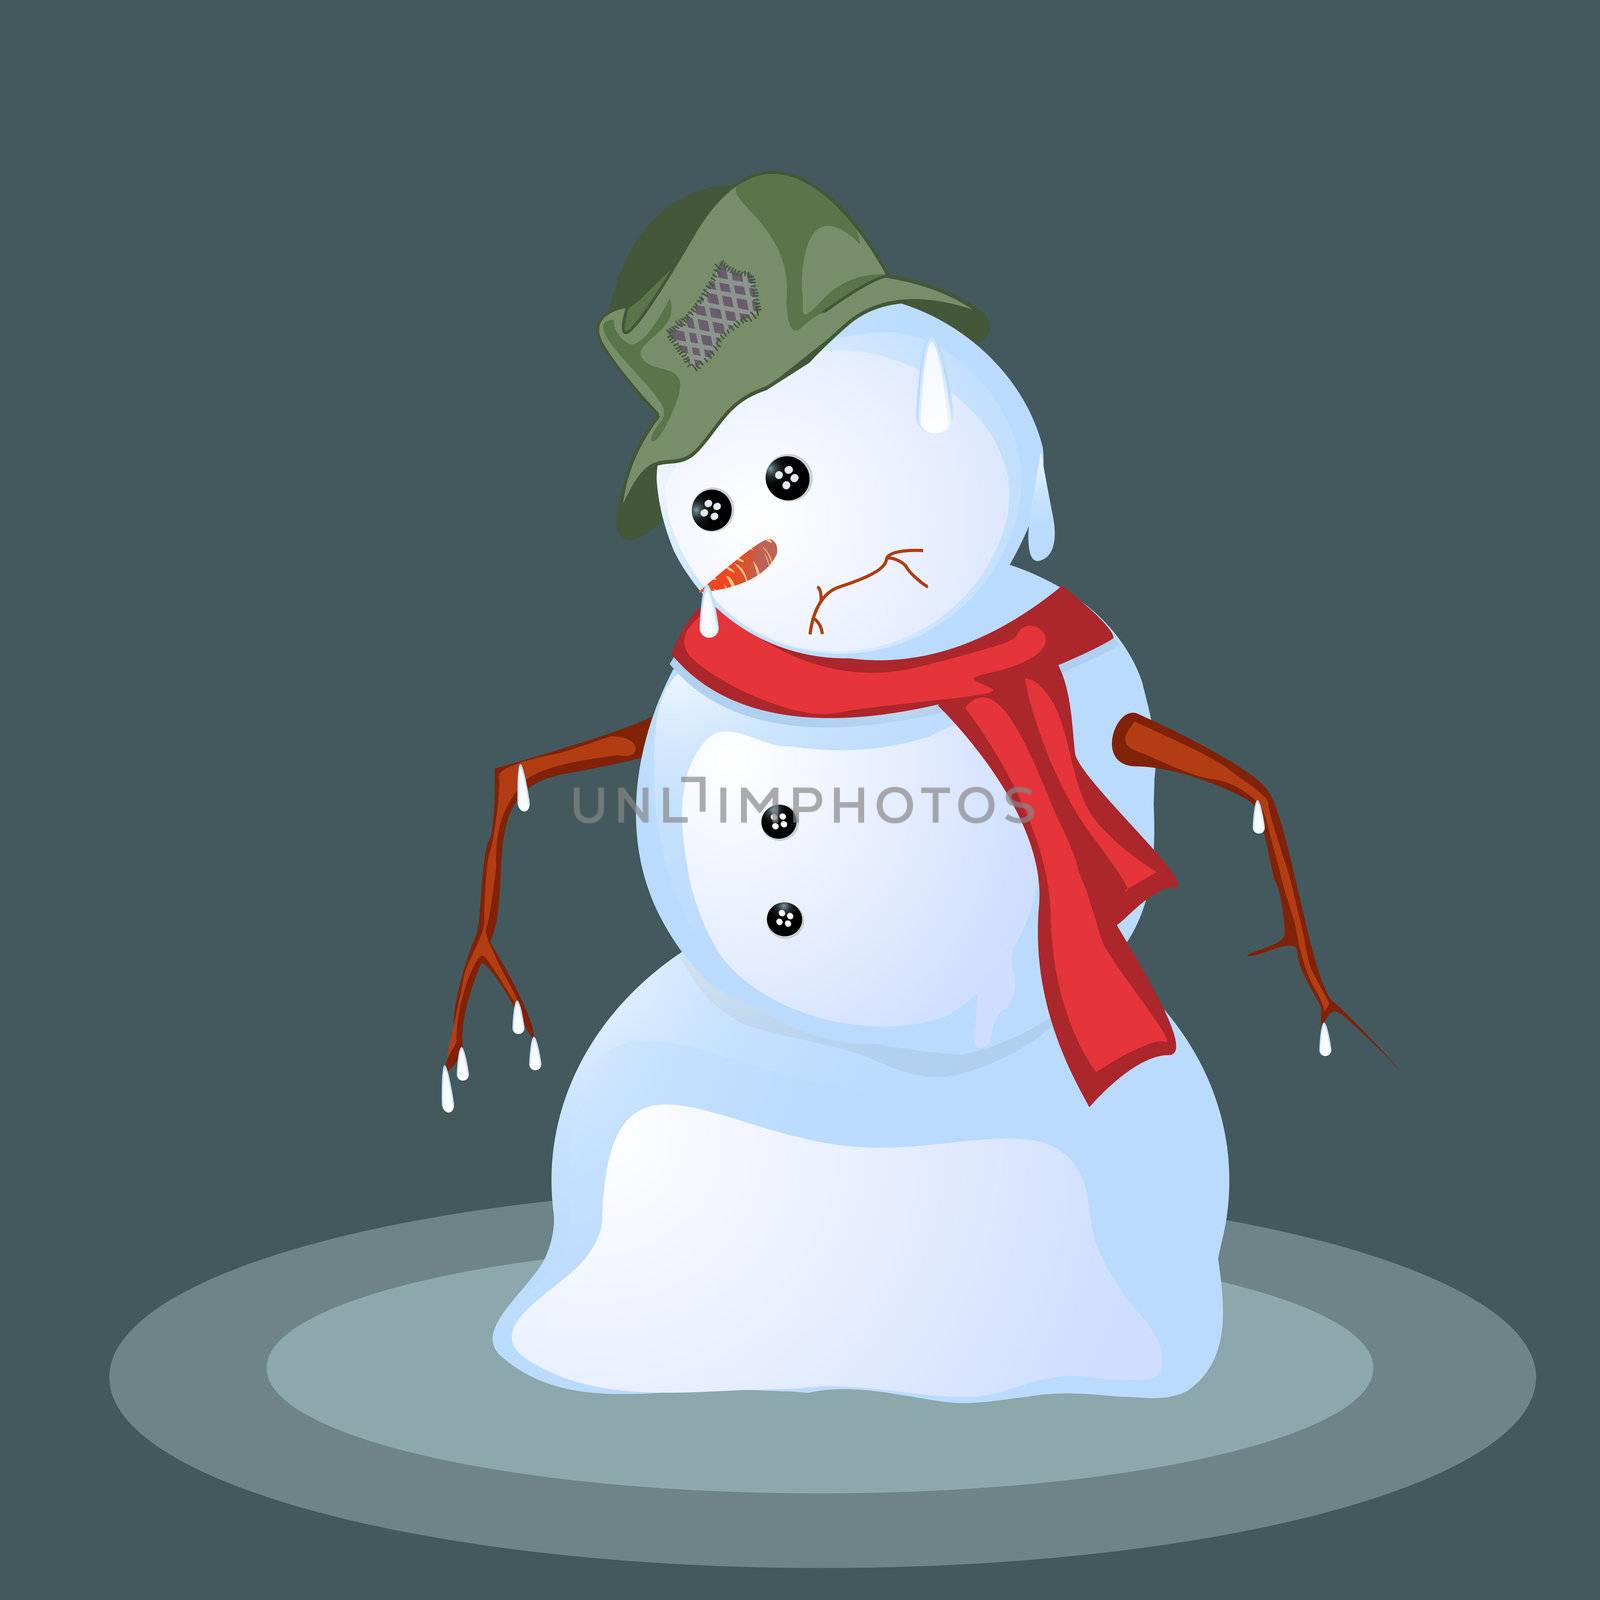 Melting snowman by Lirch